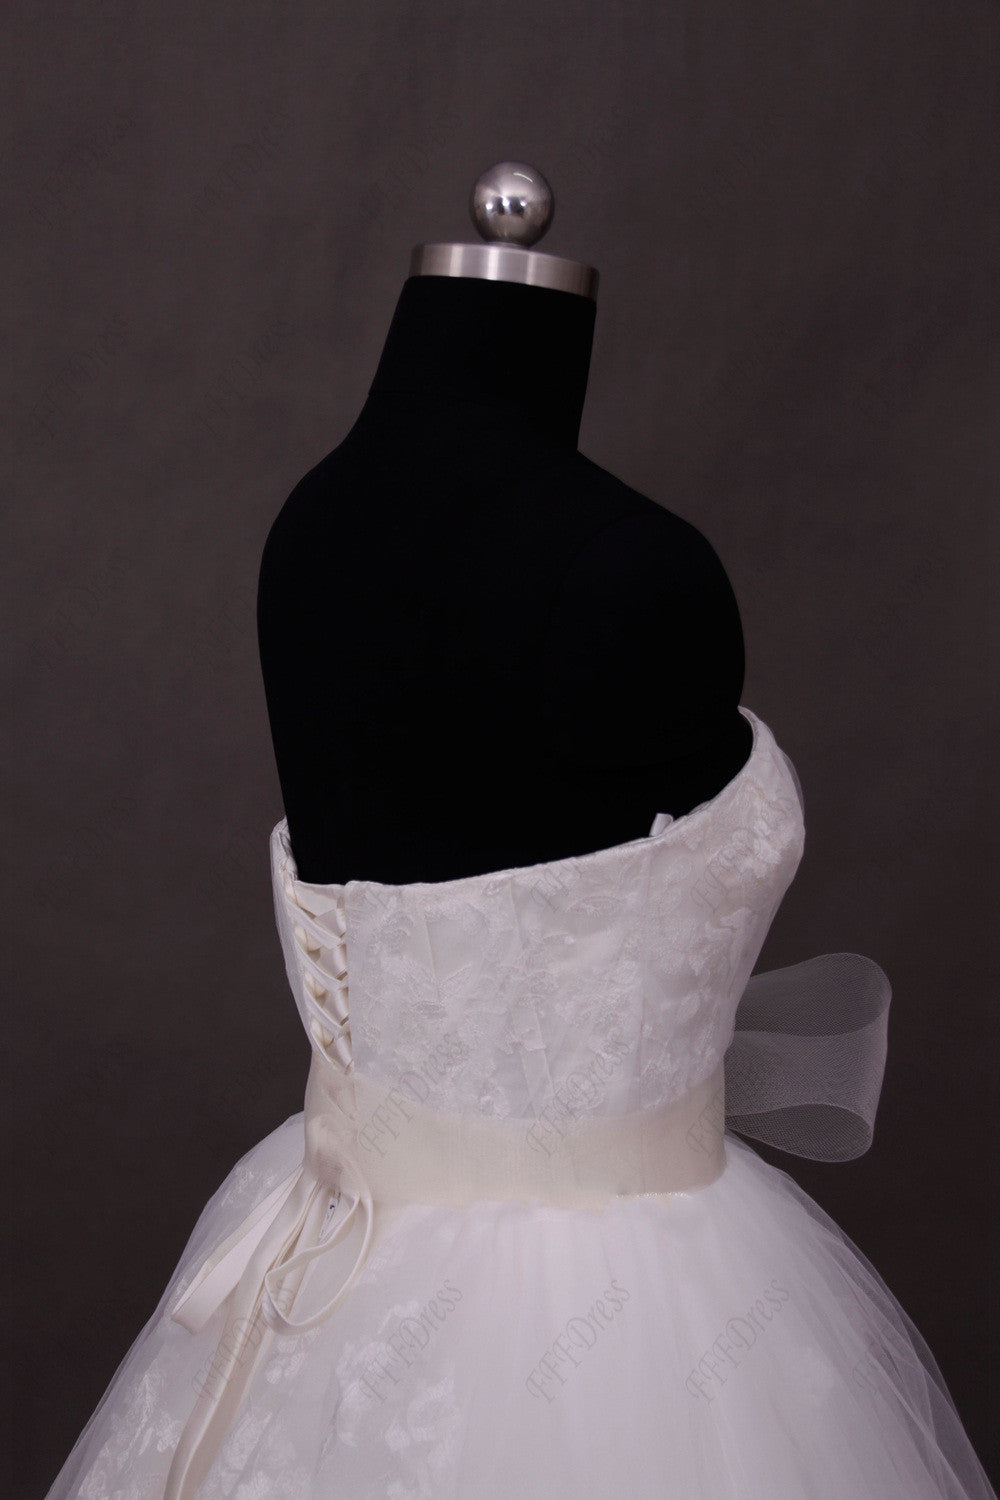 Lace princess wedding dresses with sash